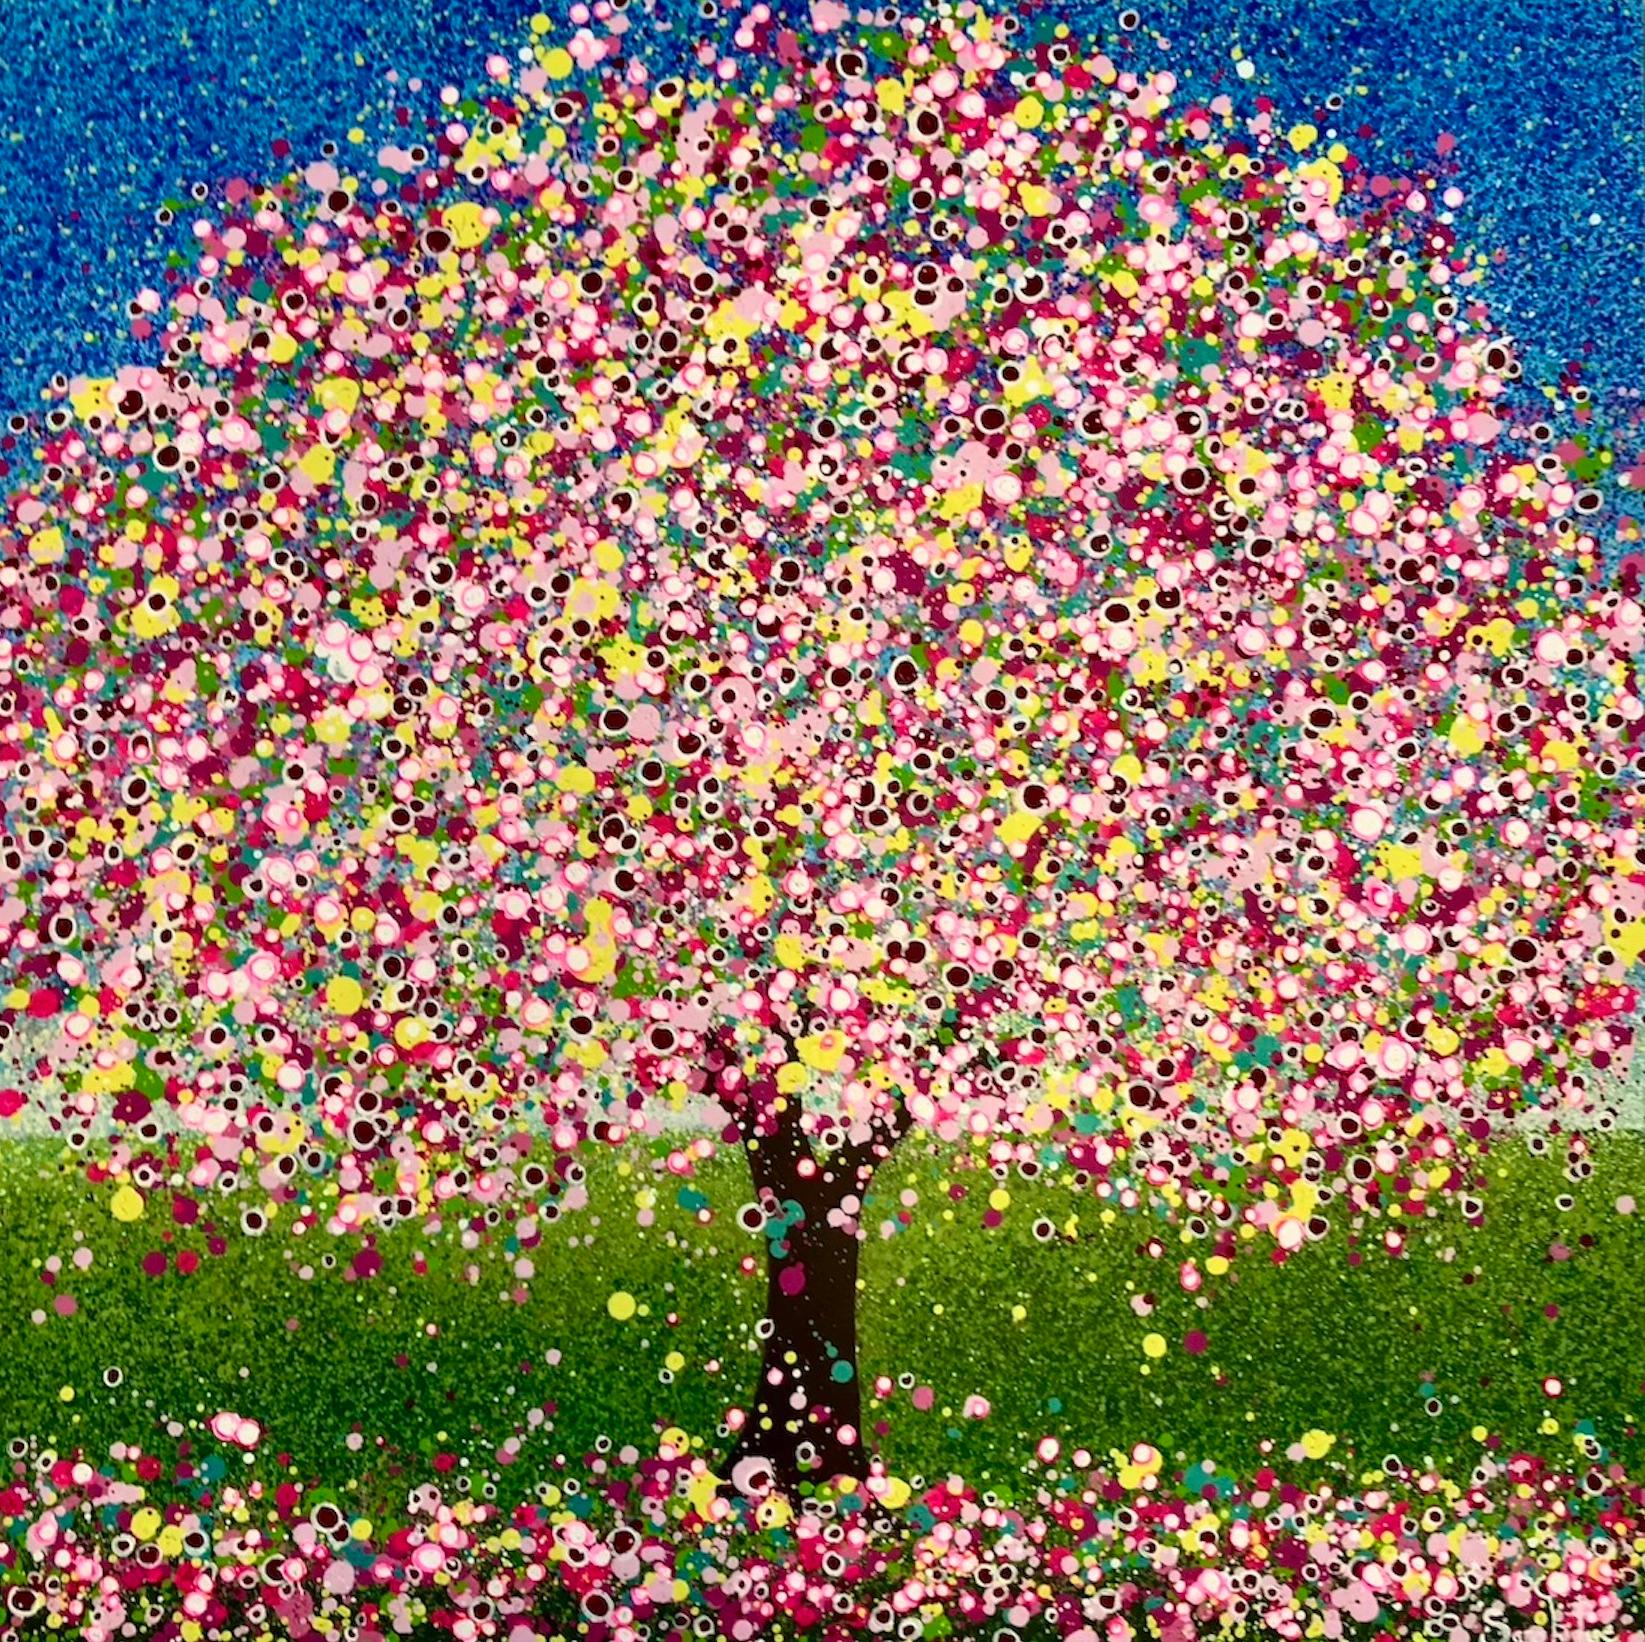 Sarah Pye  Landscape Painting - A Pop of Spring, Original Pop Art Style Landscape Tree Painting, Statement Art